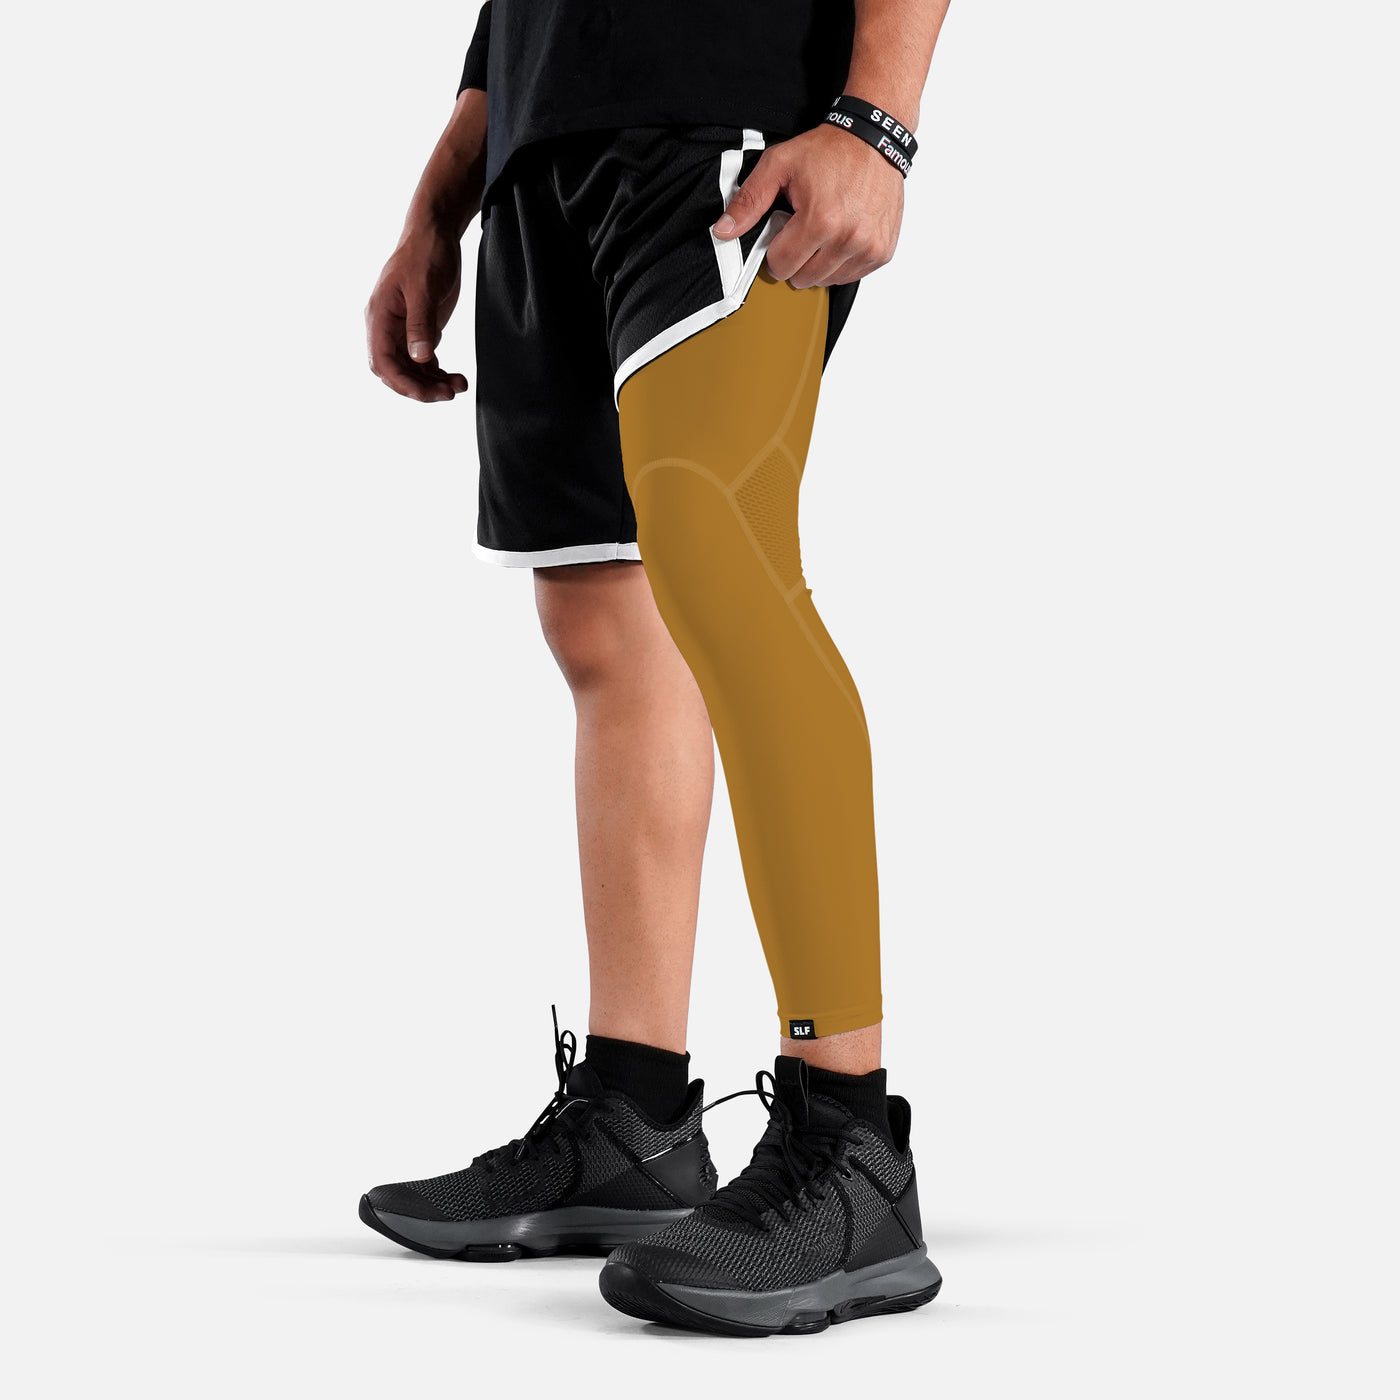 Hue Gold Pro Leg Sleeve